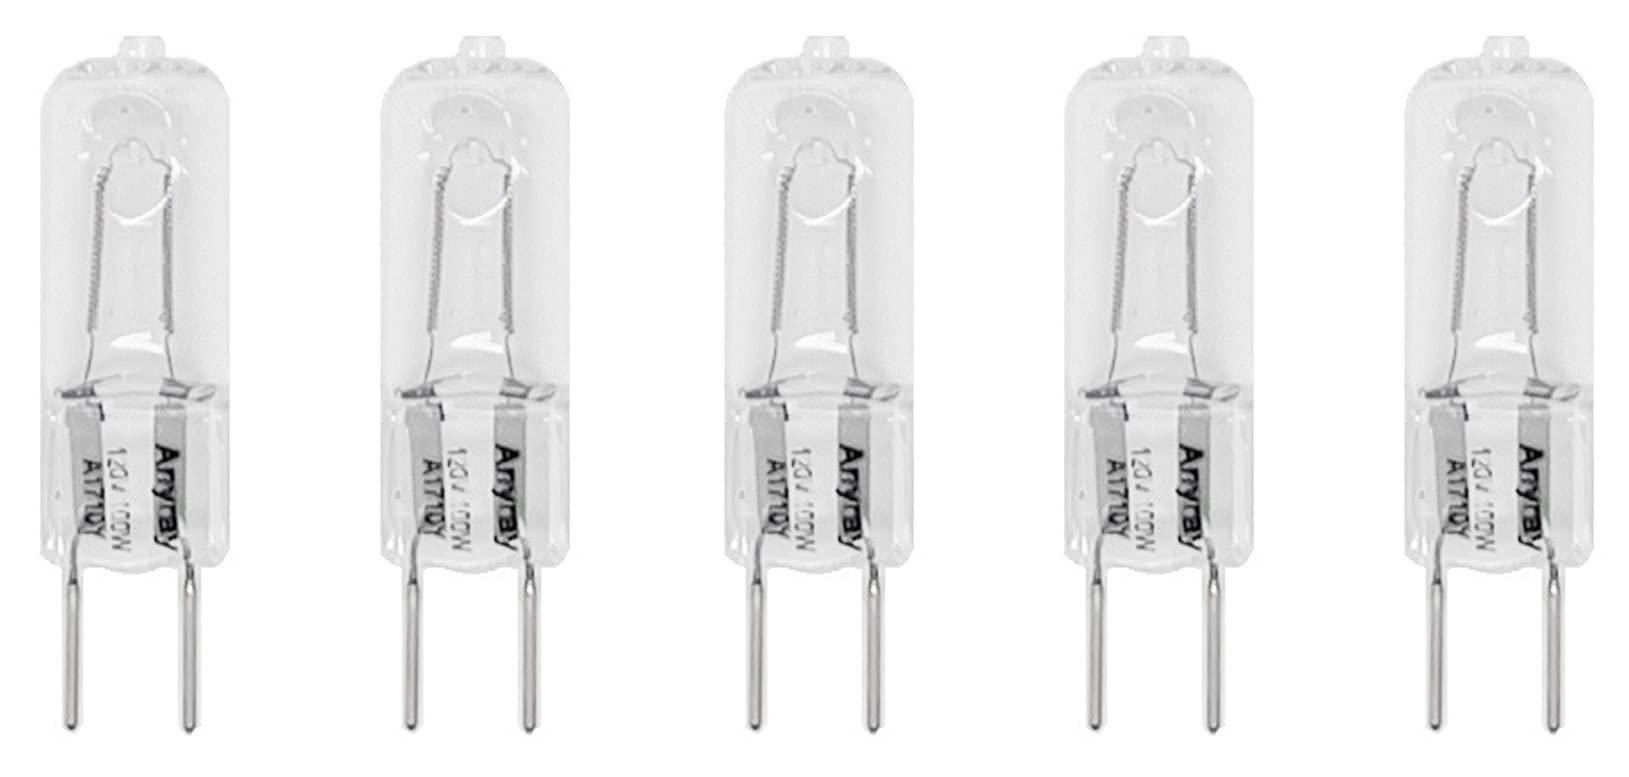 anyray a1710y (5)-pack g8 100w 100-watt 130 volt halogen t4 light gy8.6 bulbs 100watt 5-lamps